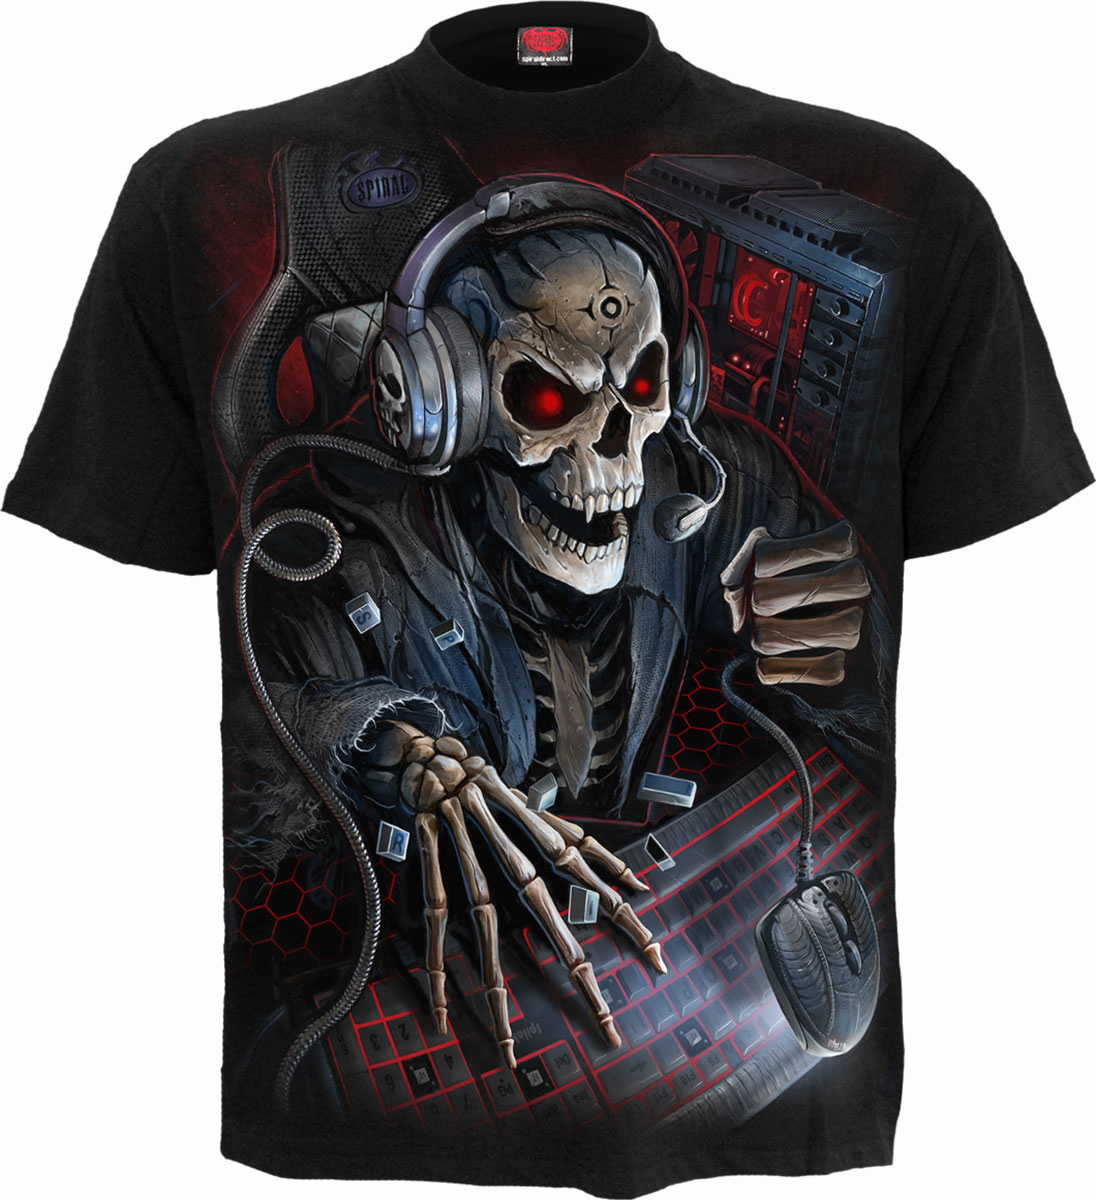 Pc Gamer Kids T-Shirt Black (Plain)